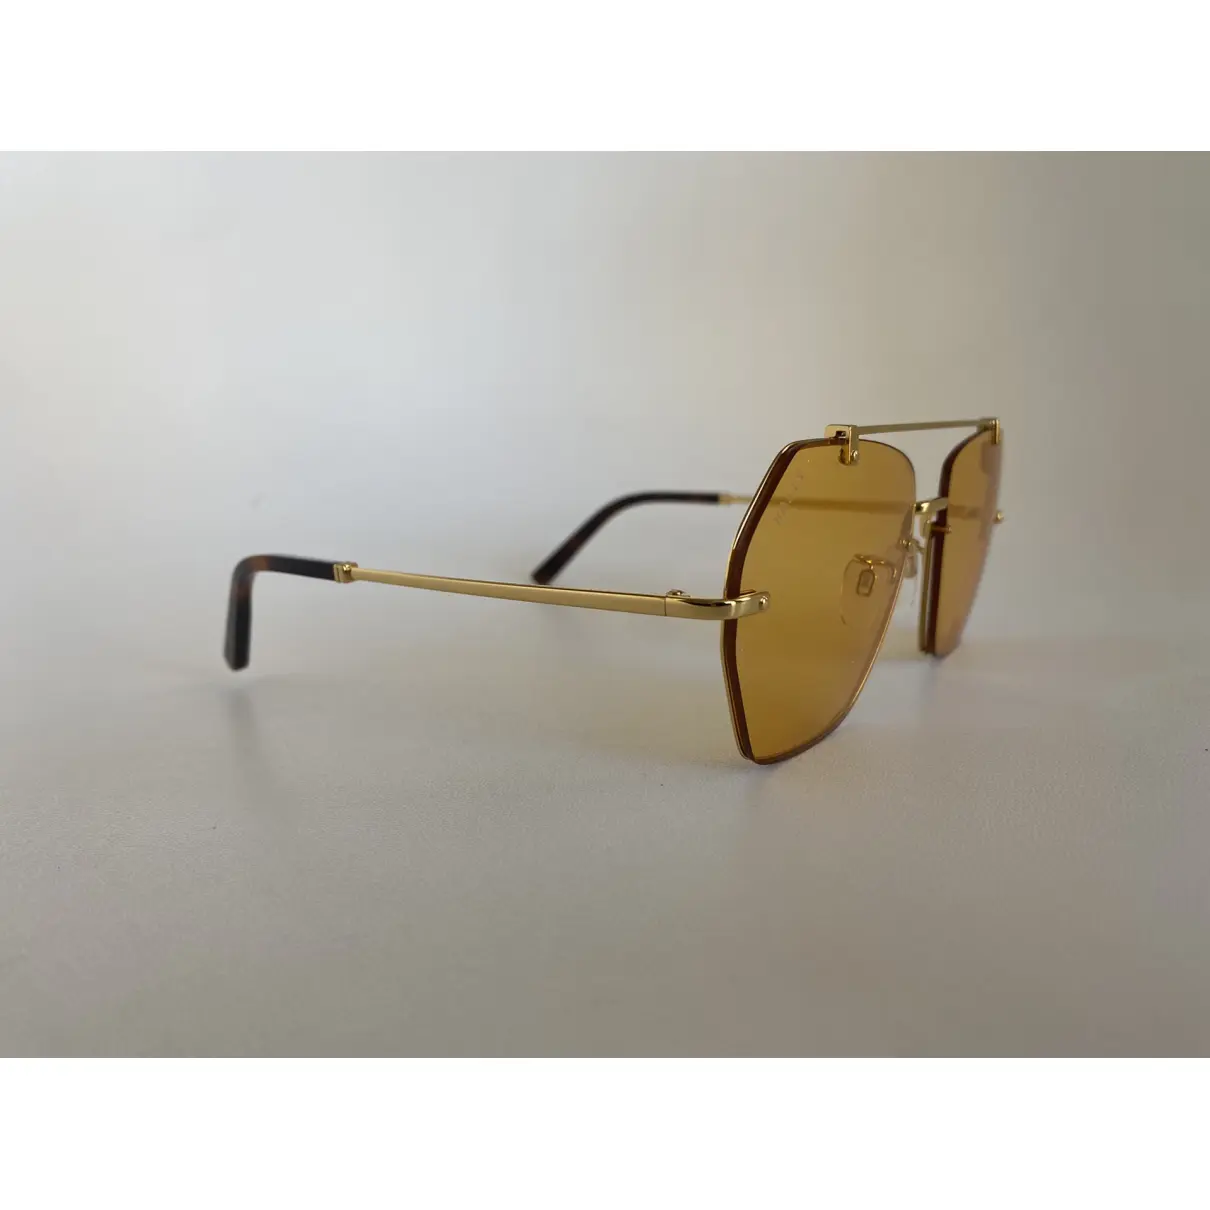 Buy Bally Sunglasses online